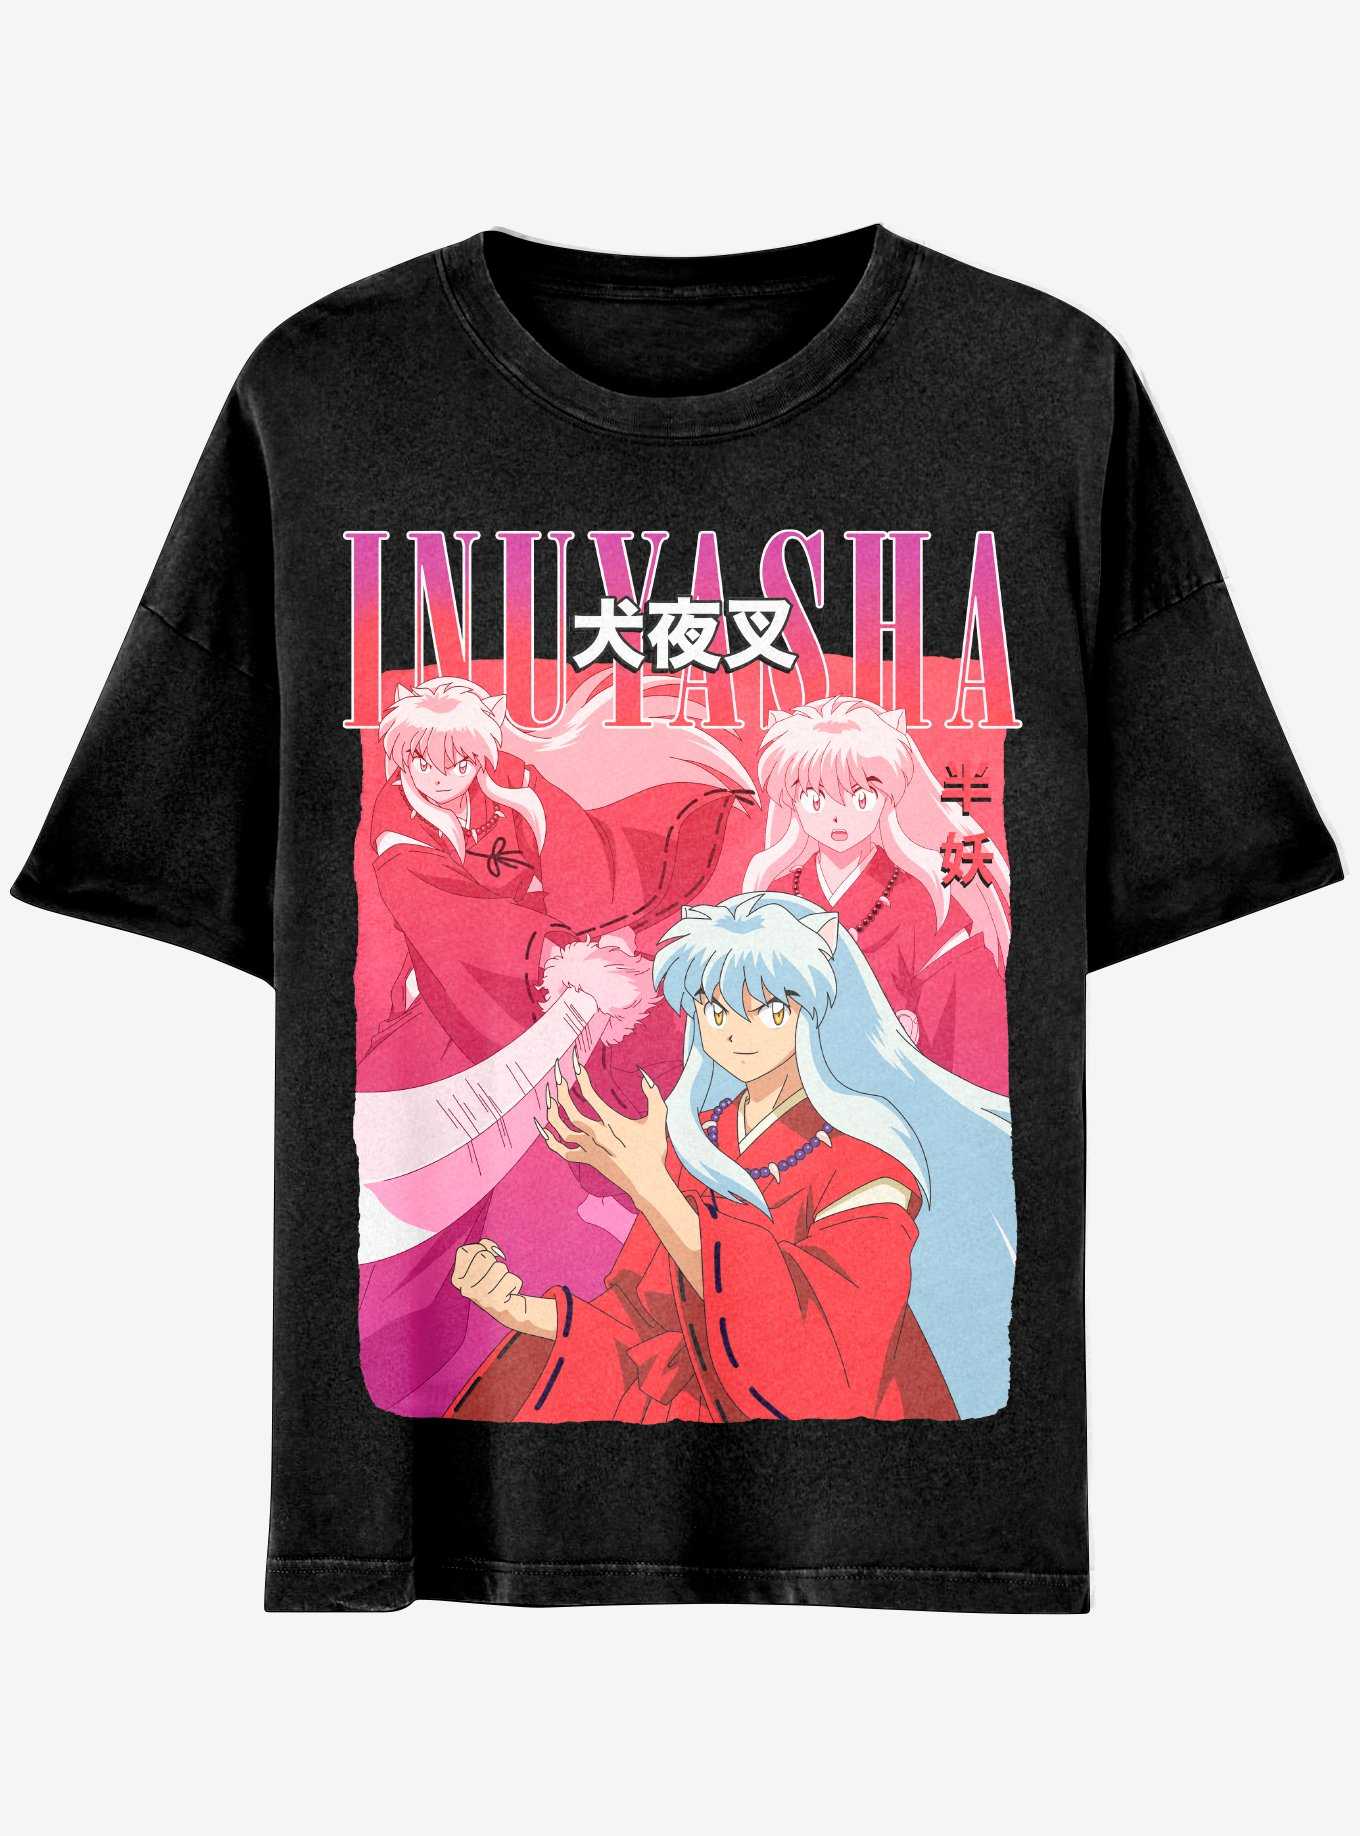 InuYasha Collage Boyfriend Fit Girls T-Shirt, , hi-res